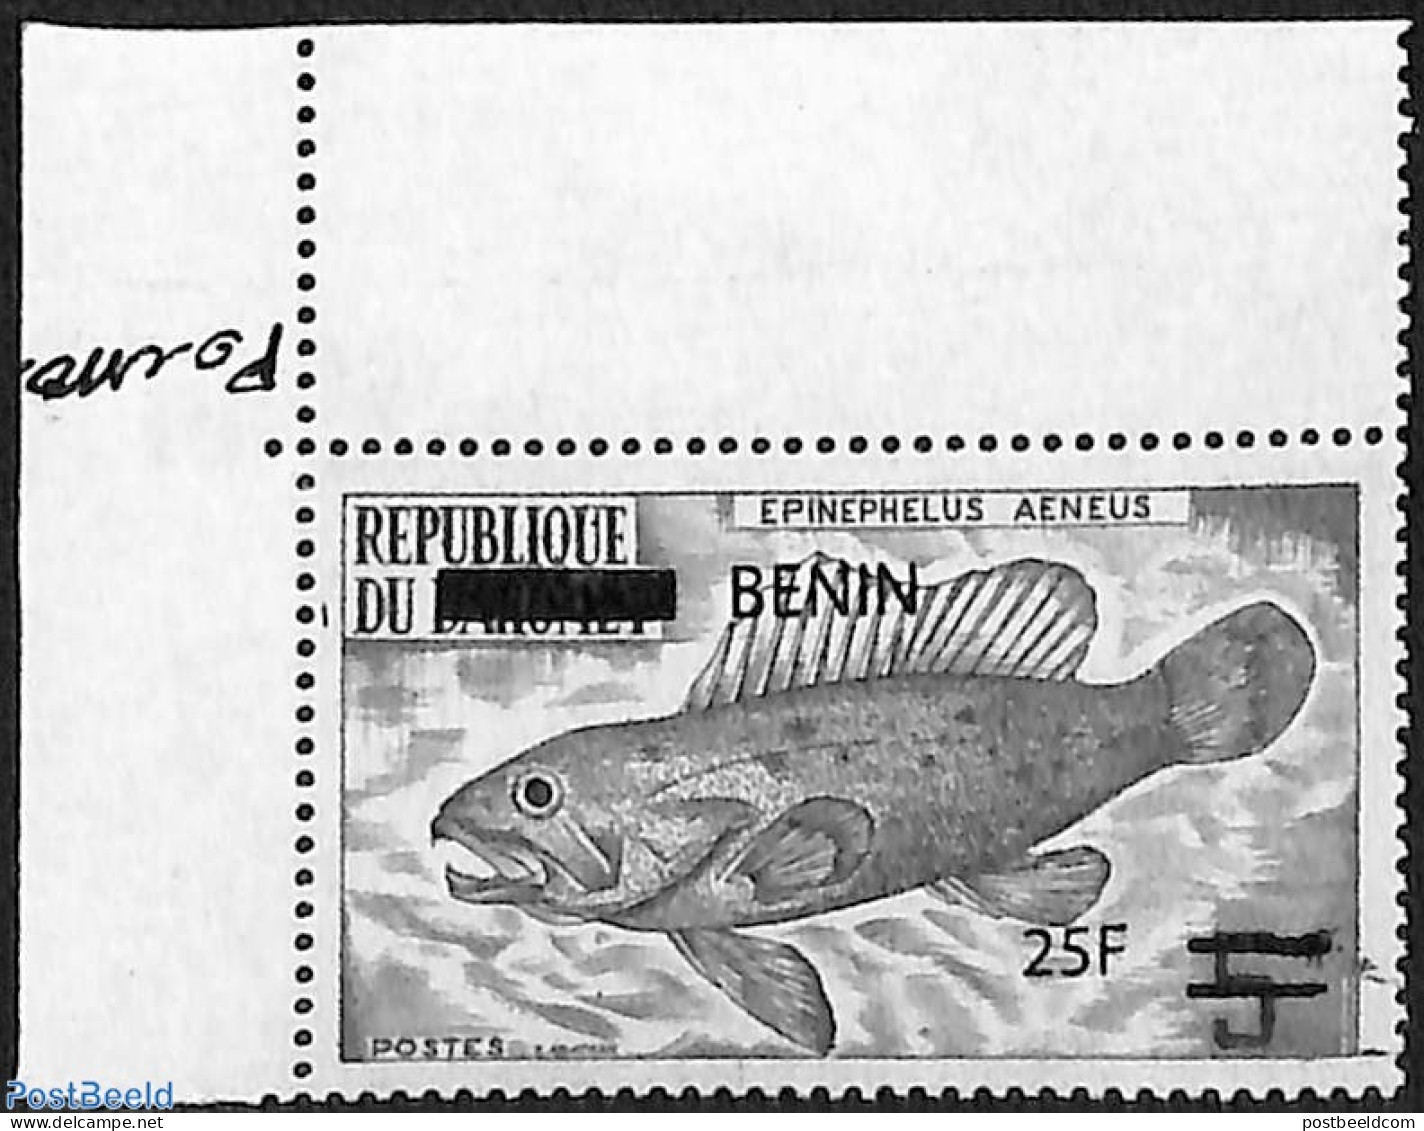 Benin 2007 Epinephelus Aeneus, Fish, Rare, Overprint, Mint NH, Nature - Various - Fish - Errors, Misprints, Plate Flaws - Nuovi